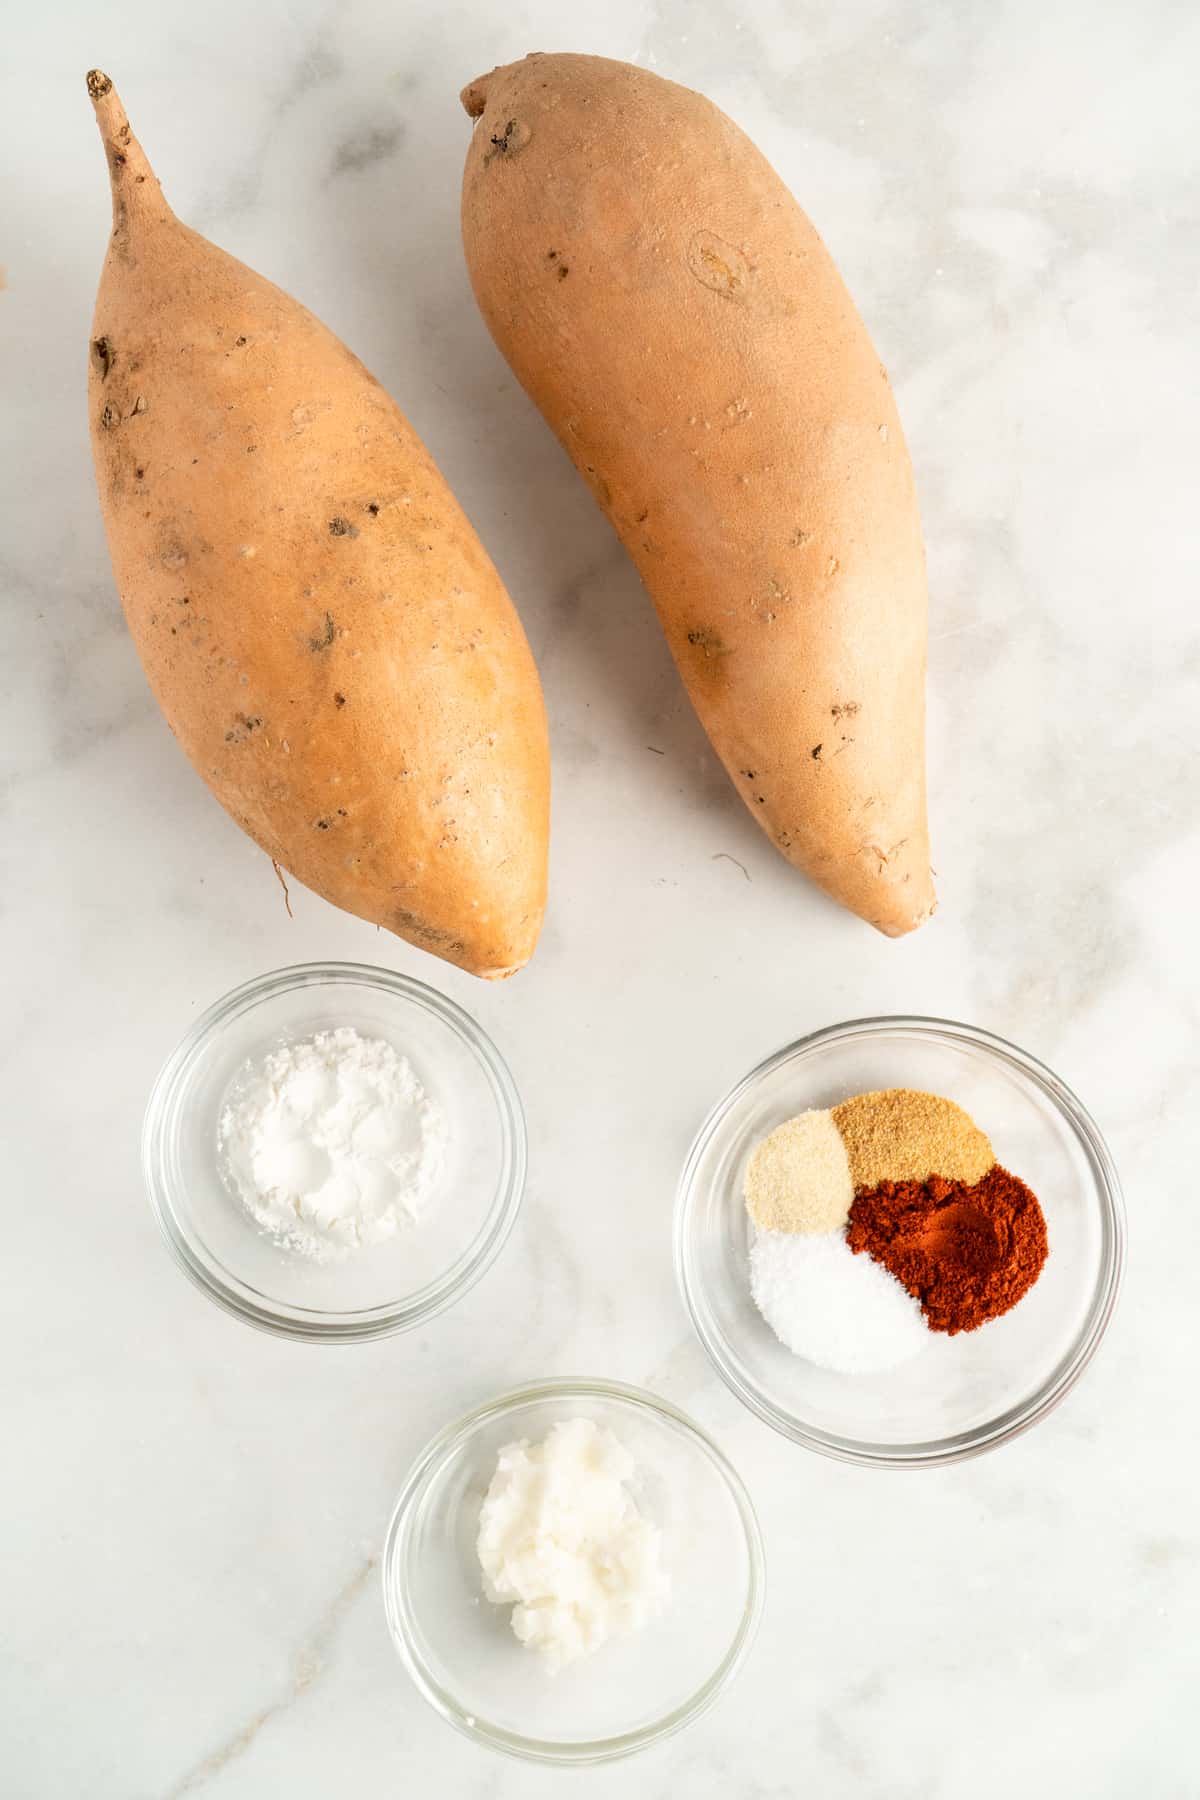 Overhead view of sweet potato tater tot ingredients